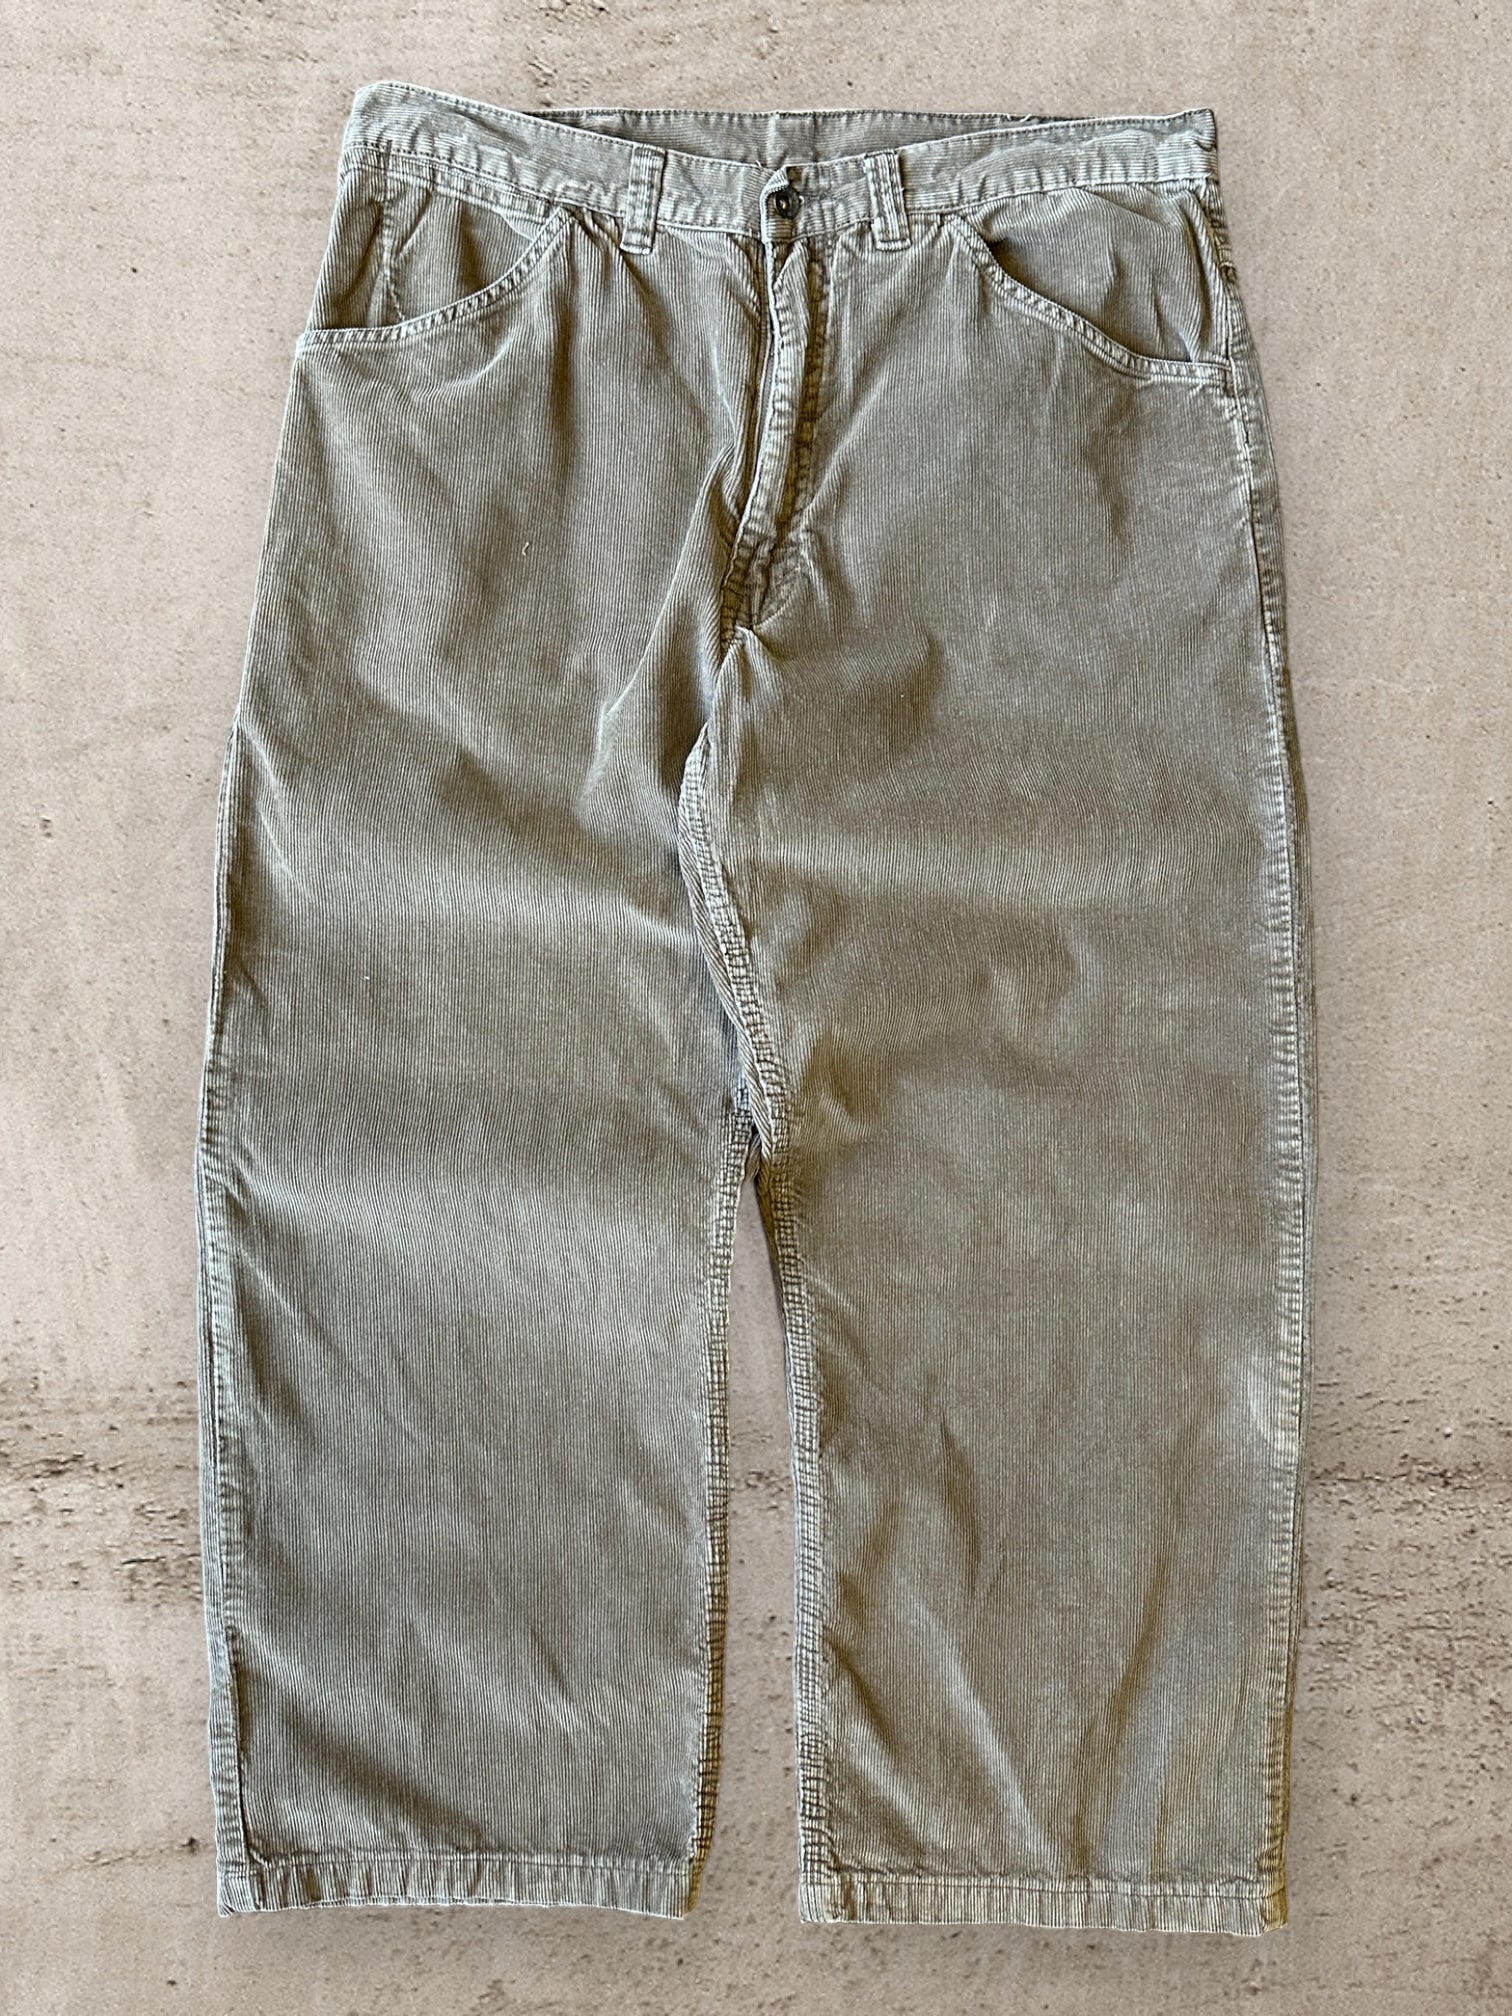 00s Gap Industrial Work Wear Corduroy Pants - 36x28